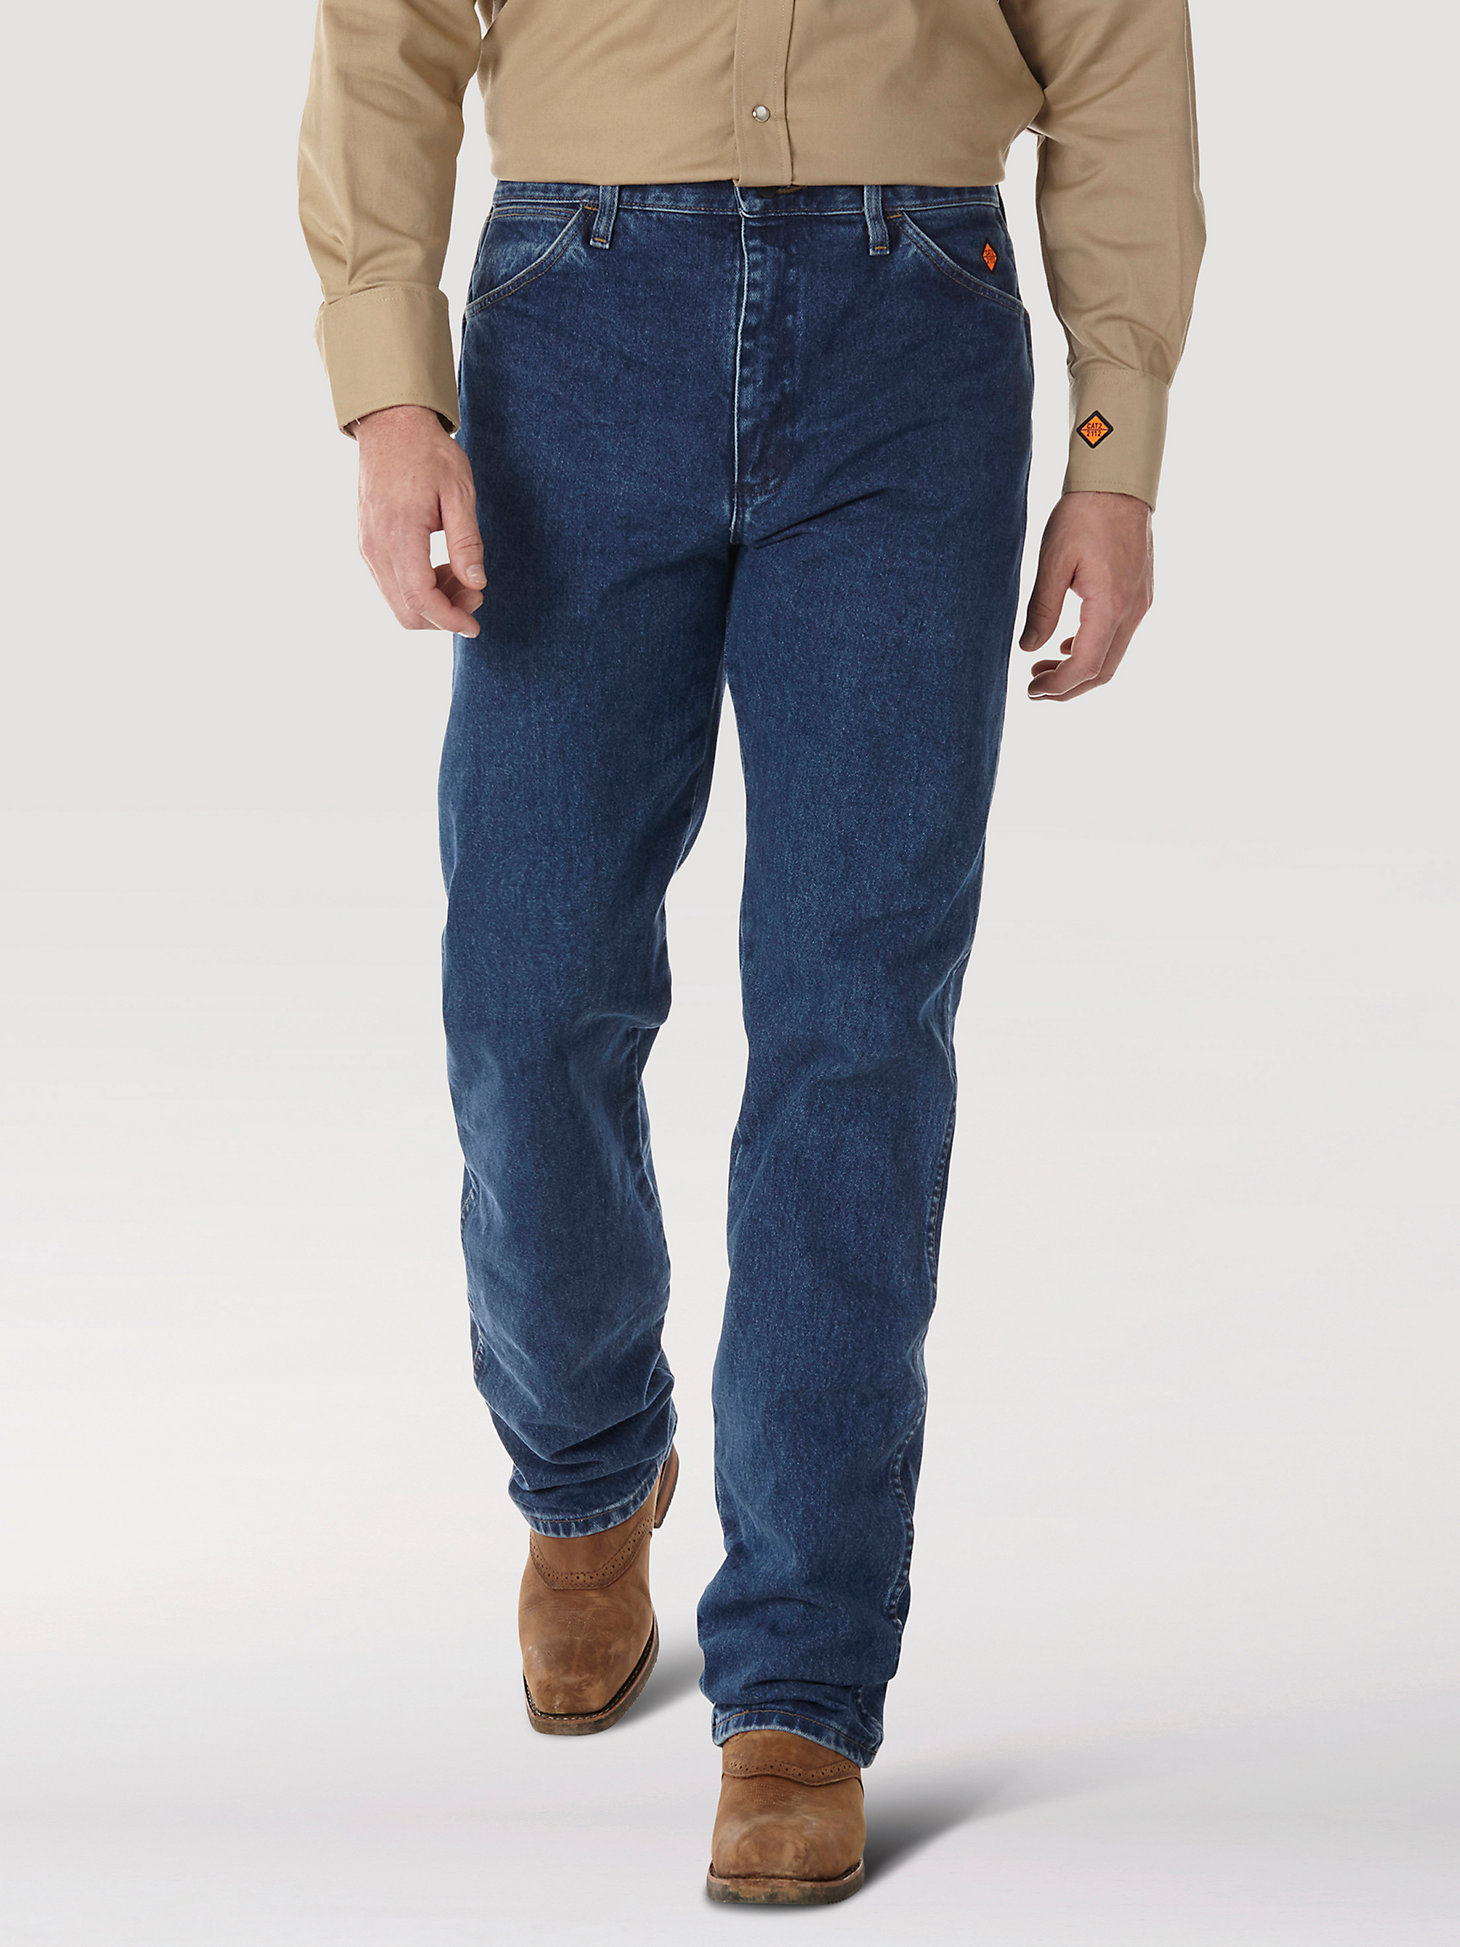 Wrangler FR 31 X 30 Denim Cotton Flame Resistant Jeans With Zipper Front Closure 